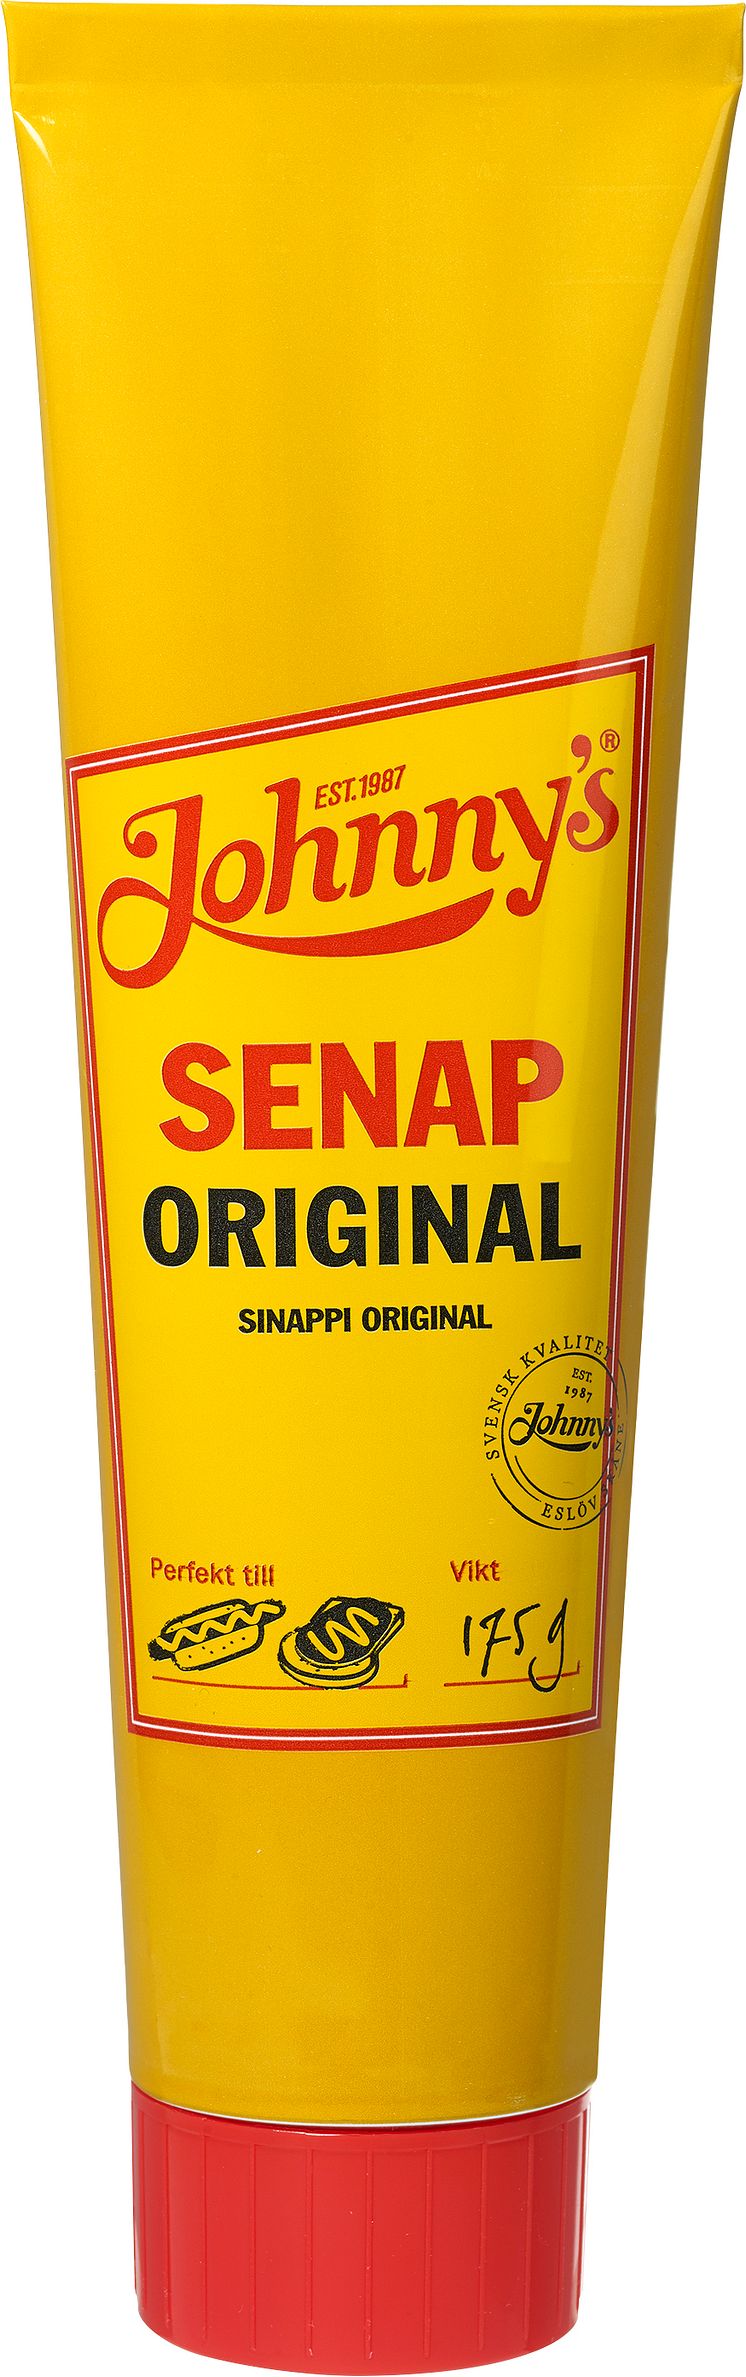 Johnny's Senap Original 